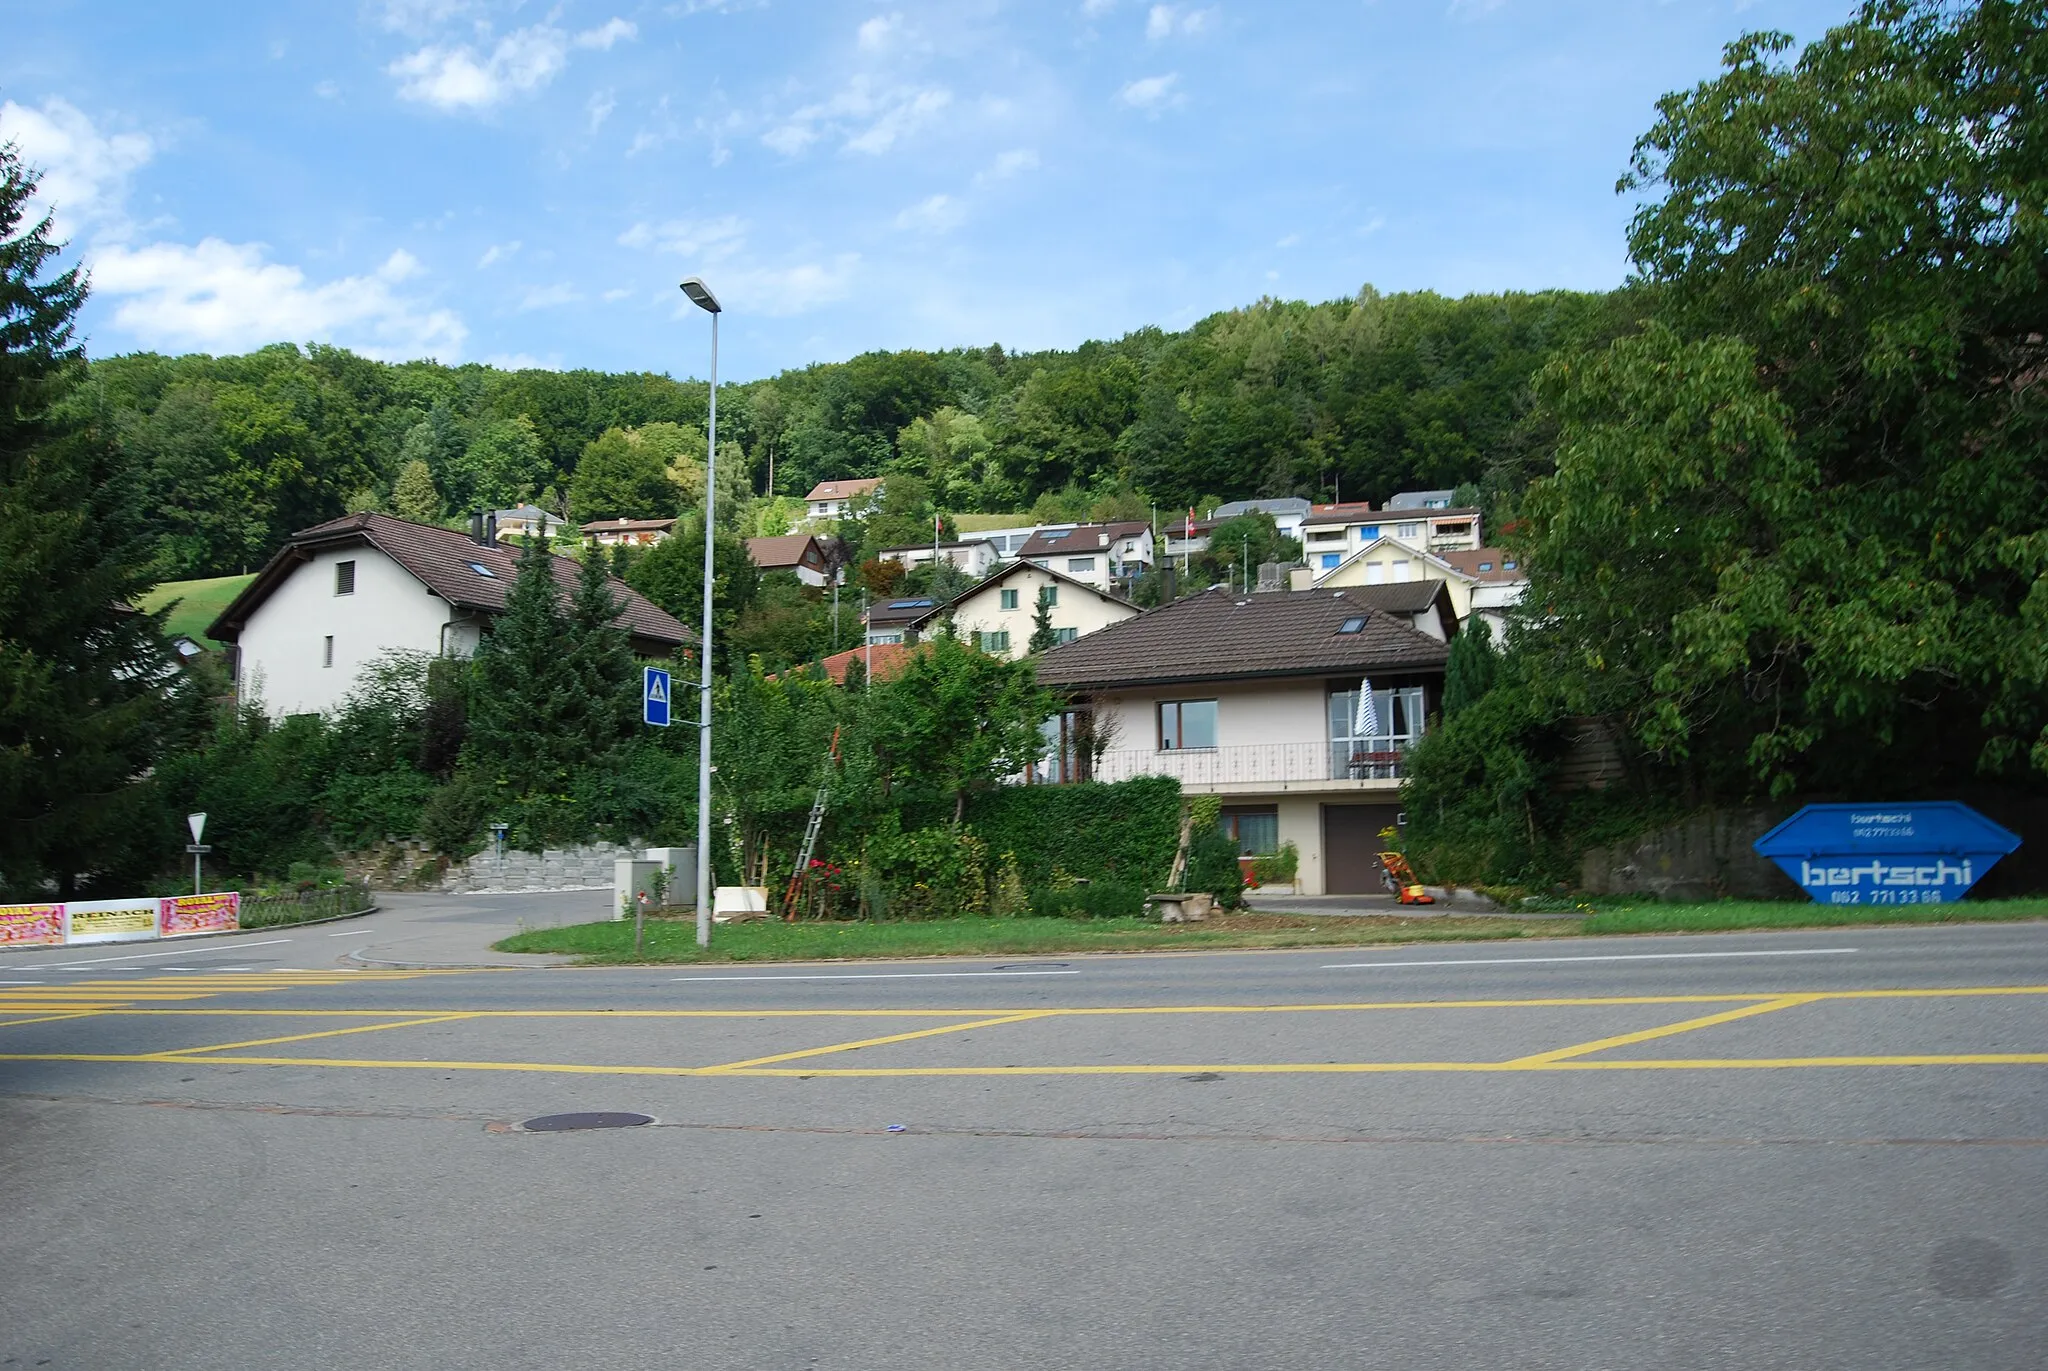 Photo showing: Leimbach, canton of Aargau, Switzerland